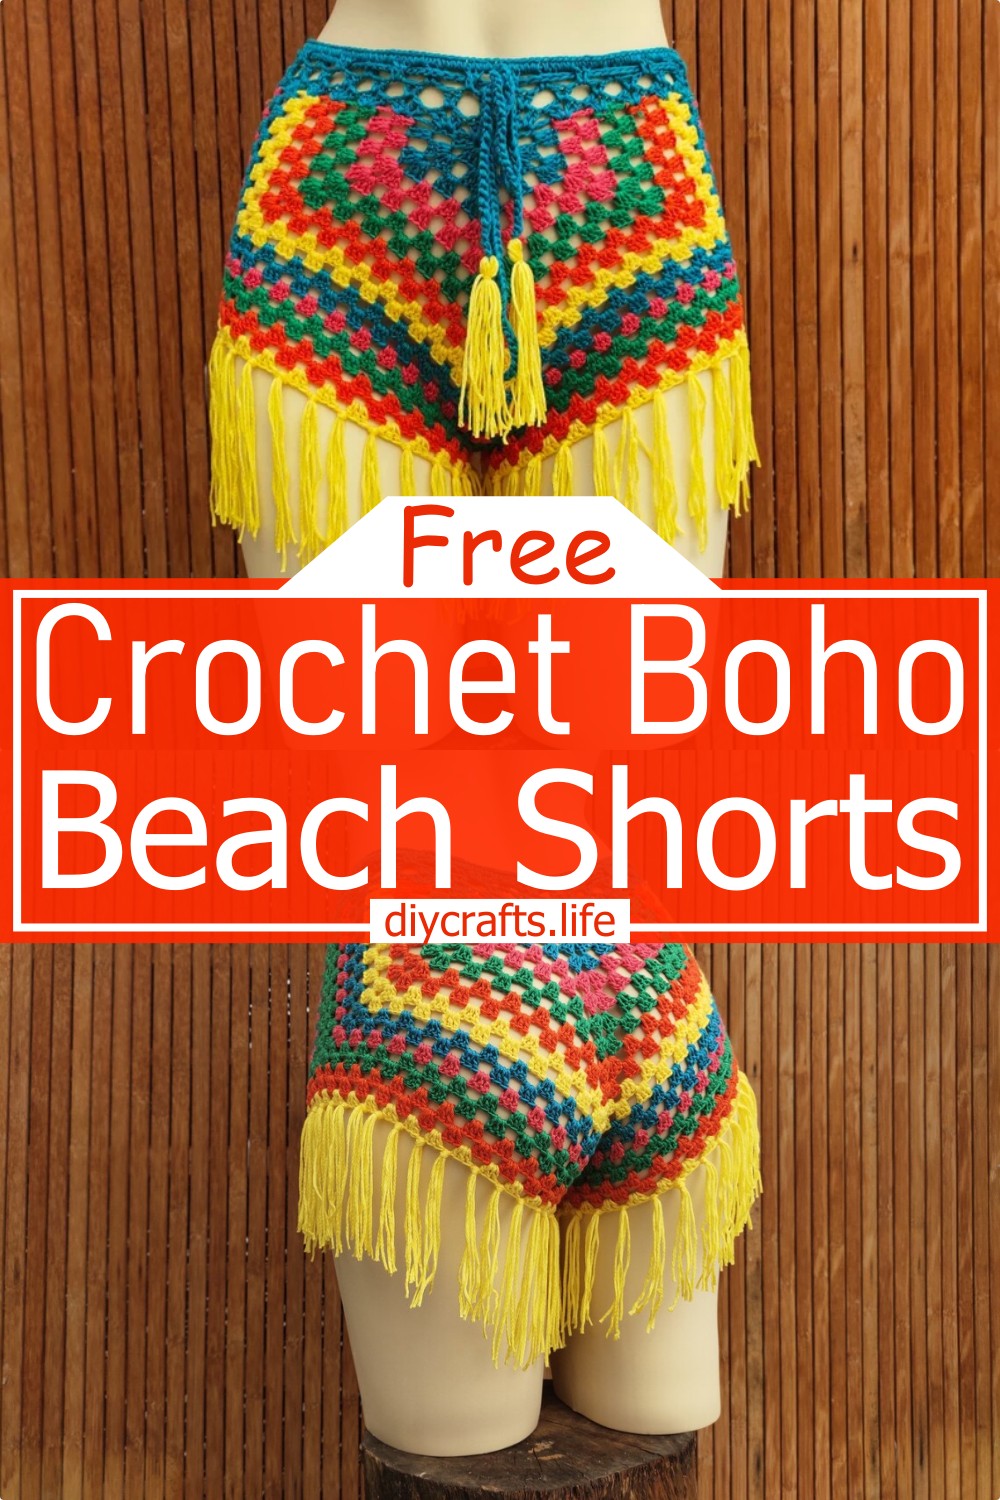 Crochet Boho Beach Shorts